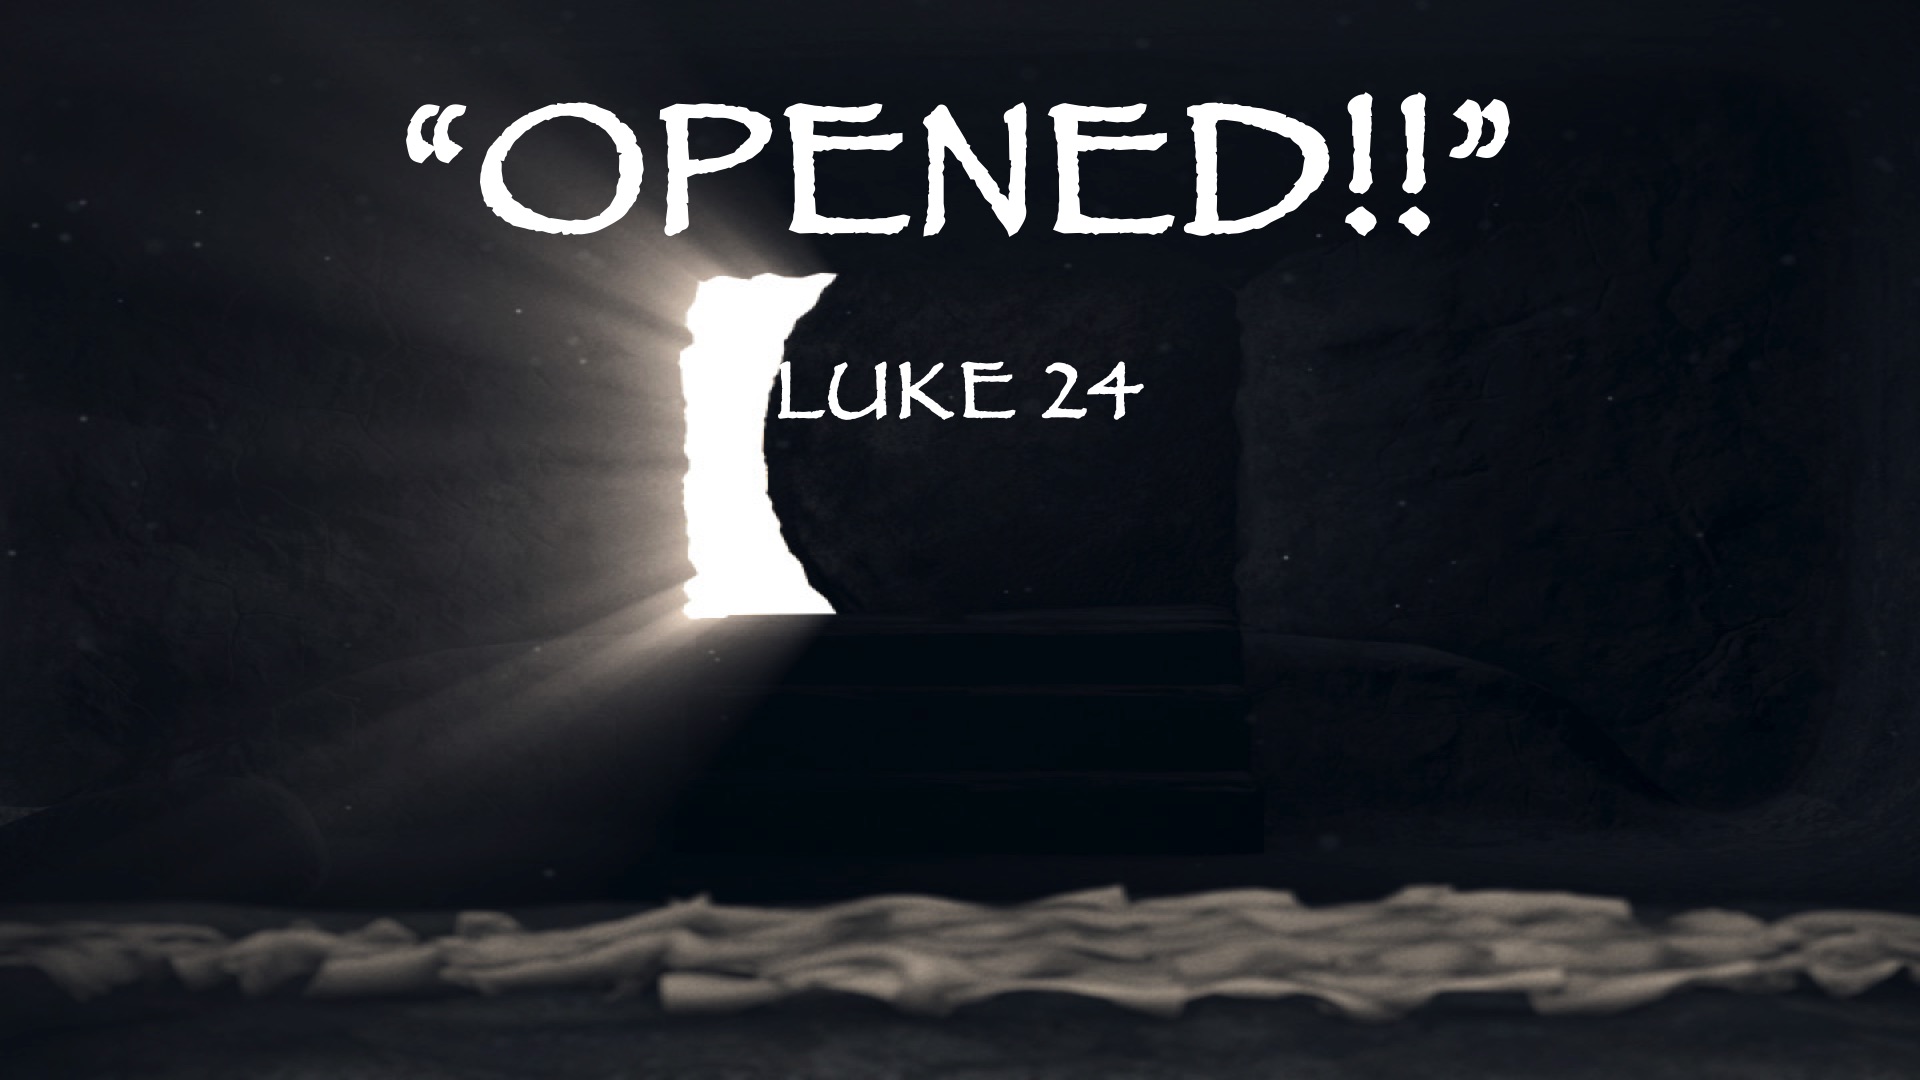 “OPENED!!”